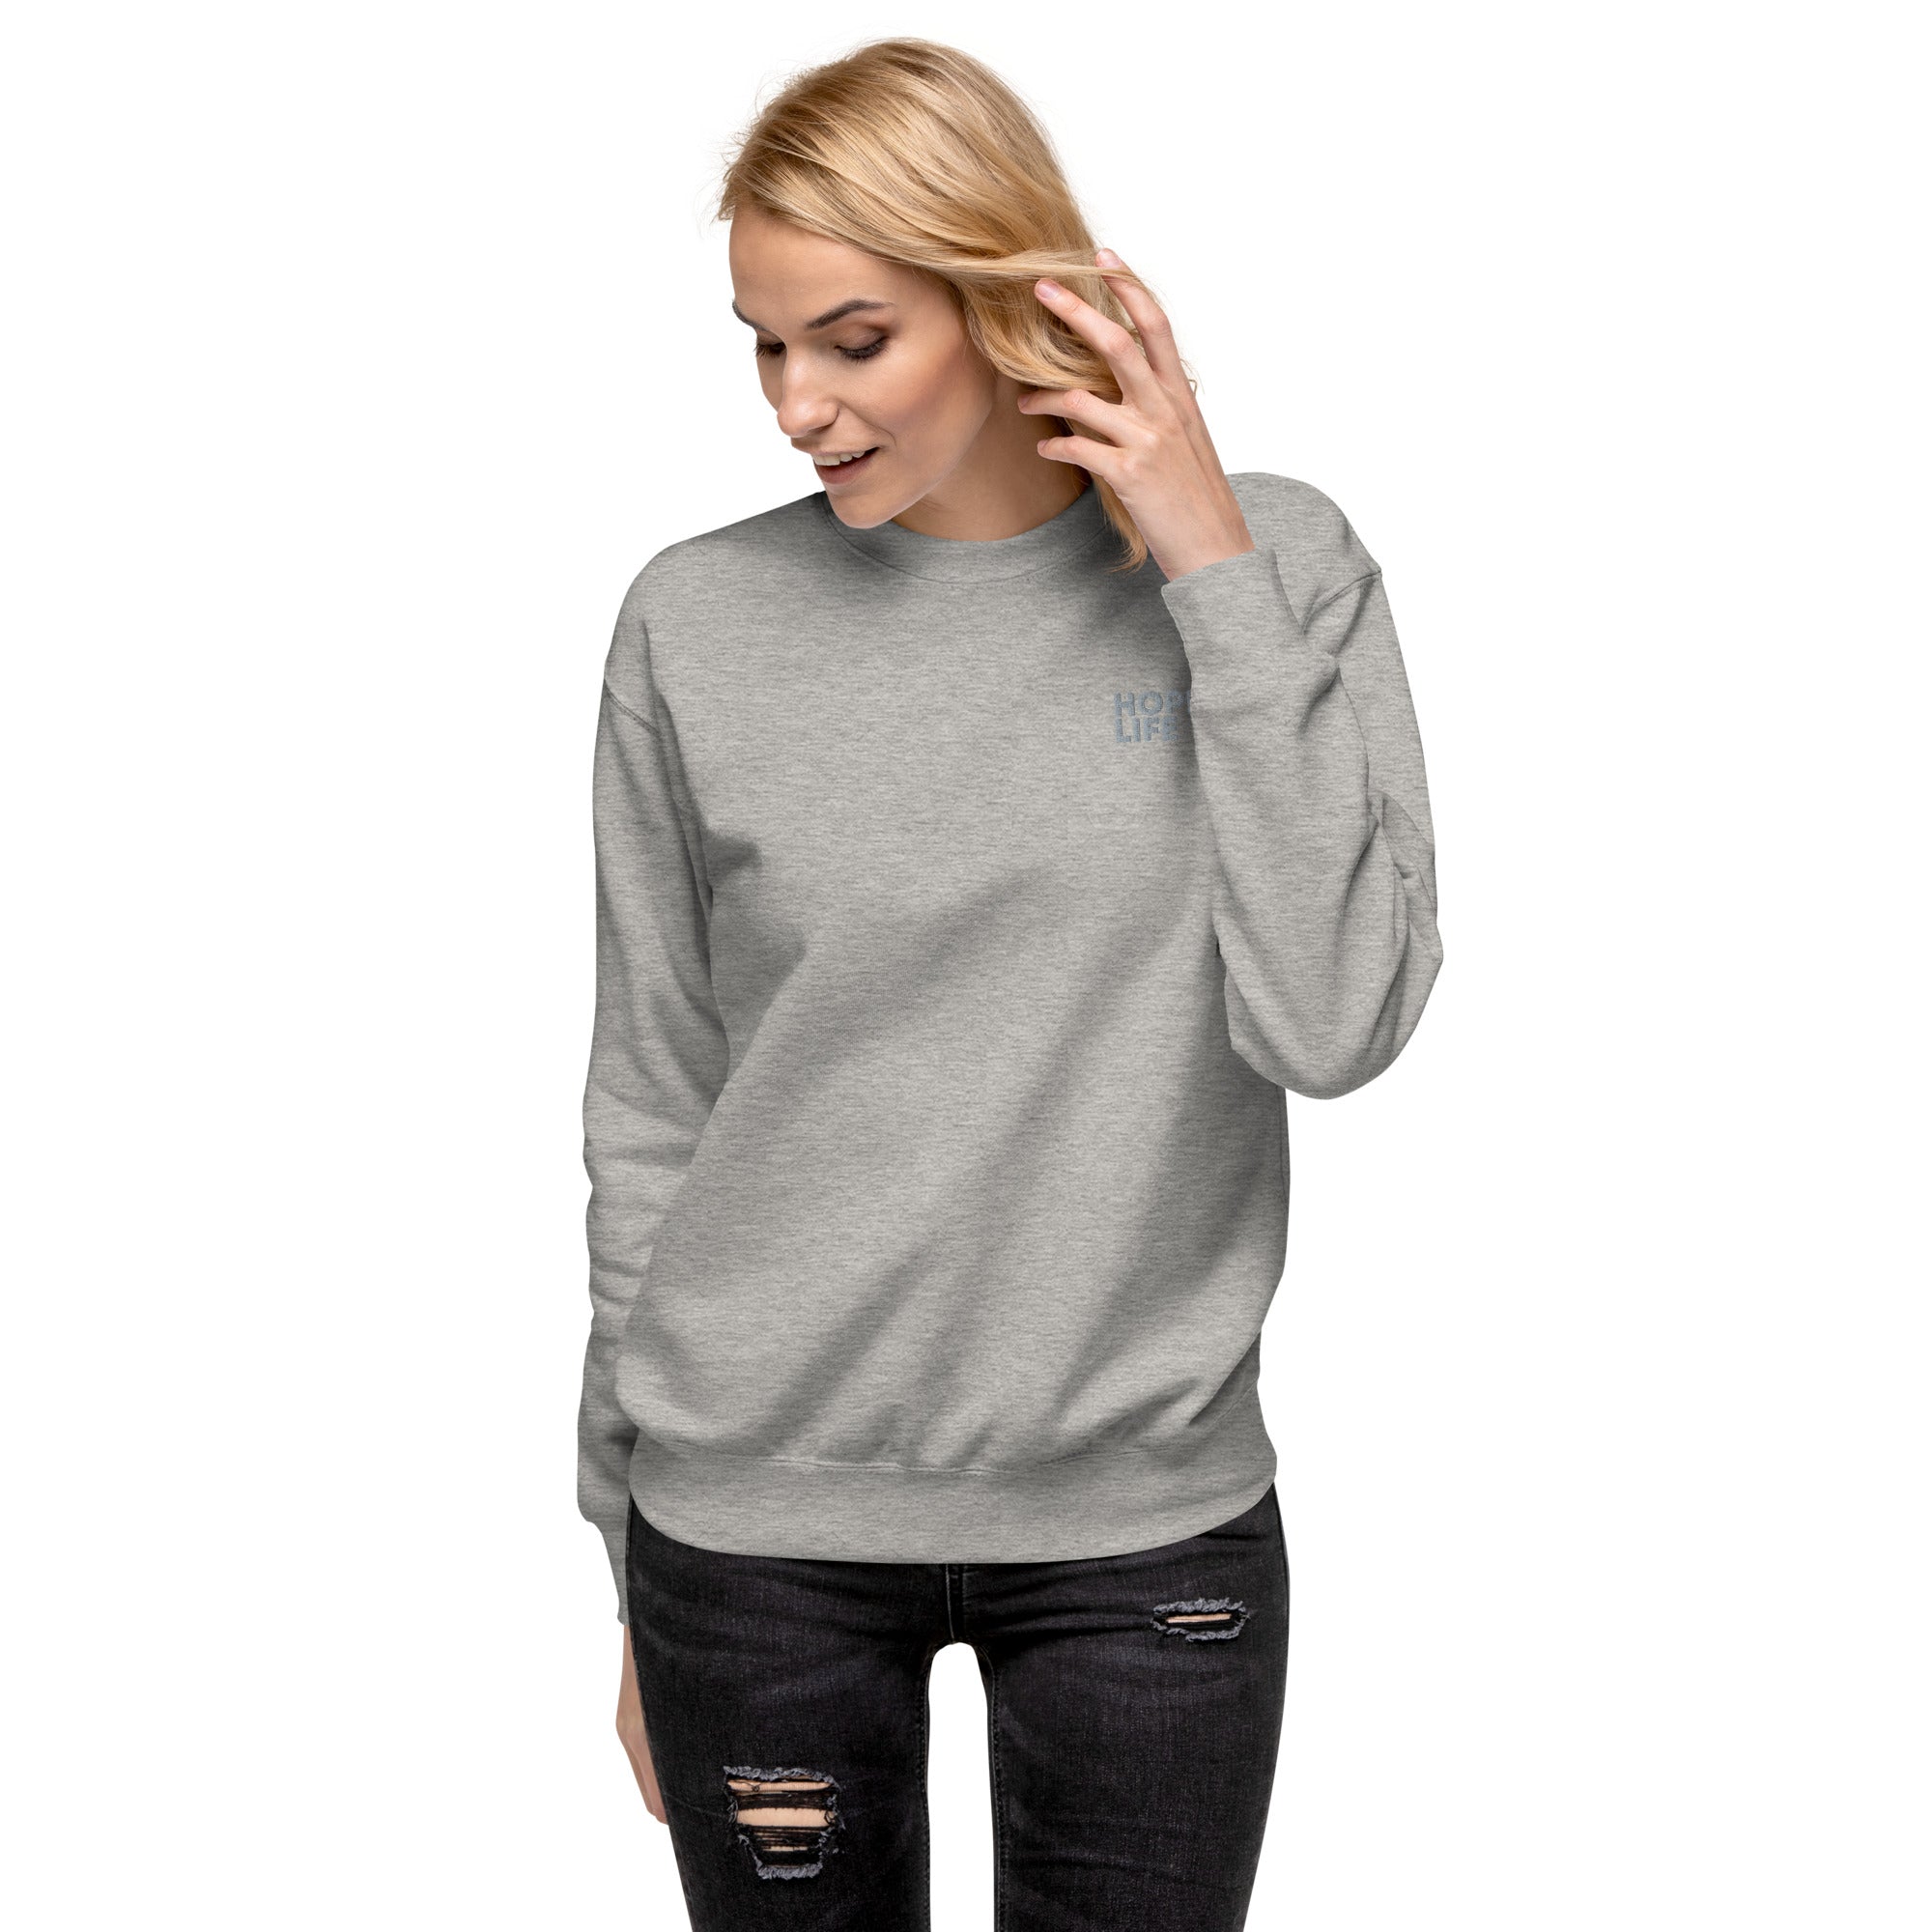 Premium Embroidered Sweatshirt